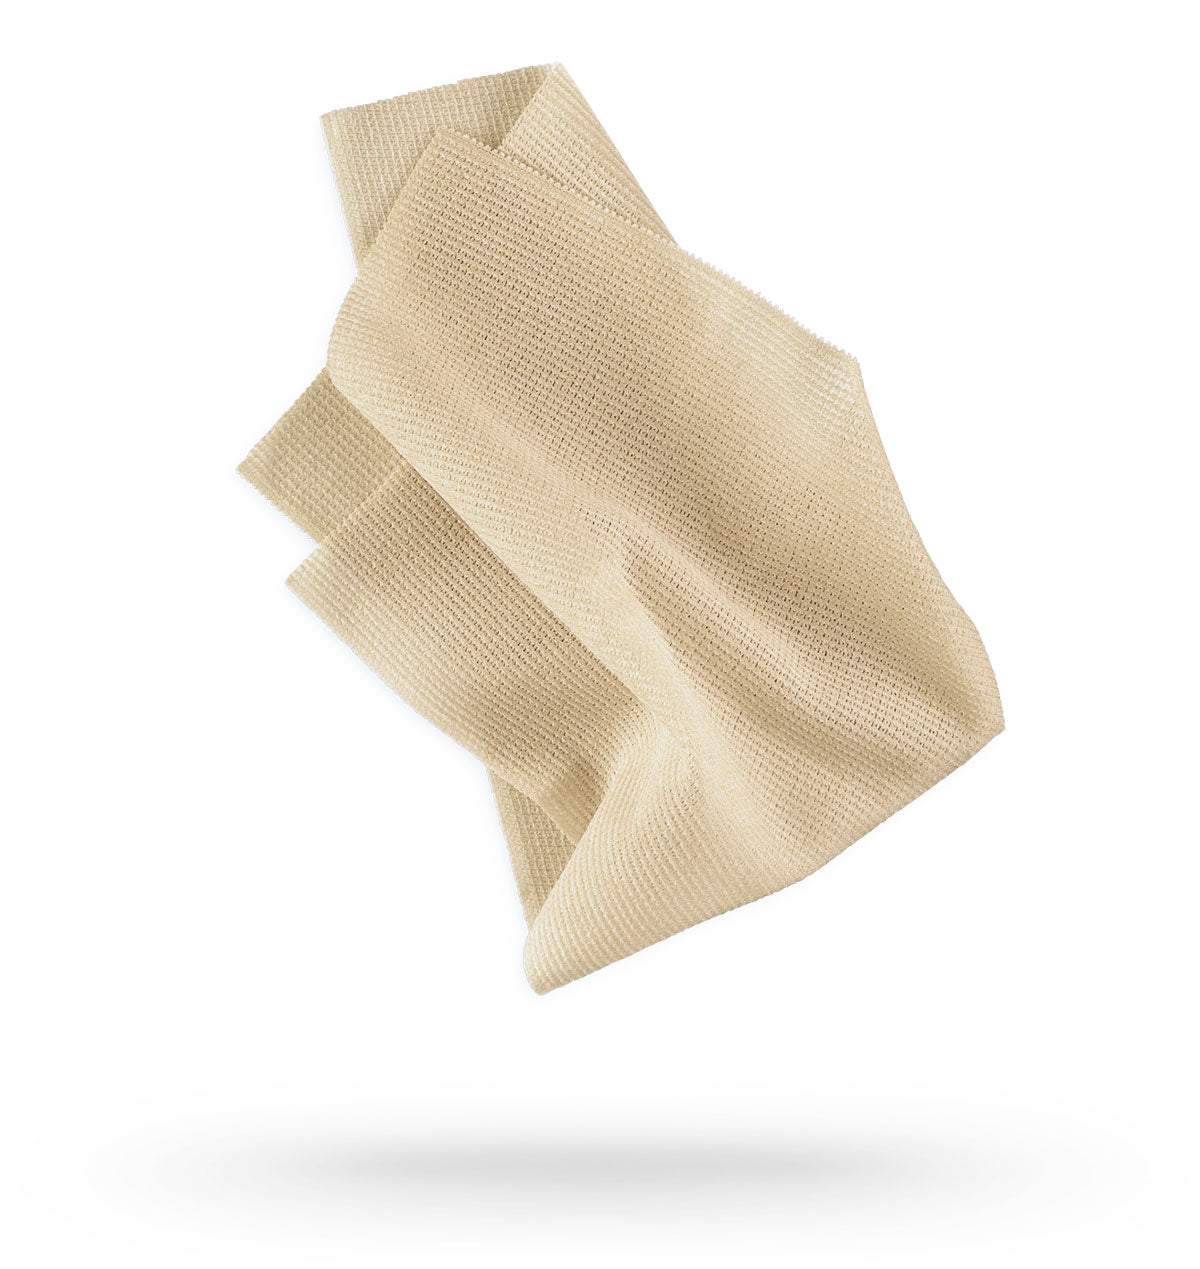 hapheal Tacky Towel Grip Enhancer- Perfort for Tennis,Pickle Ball